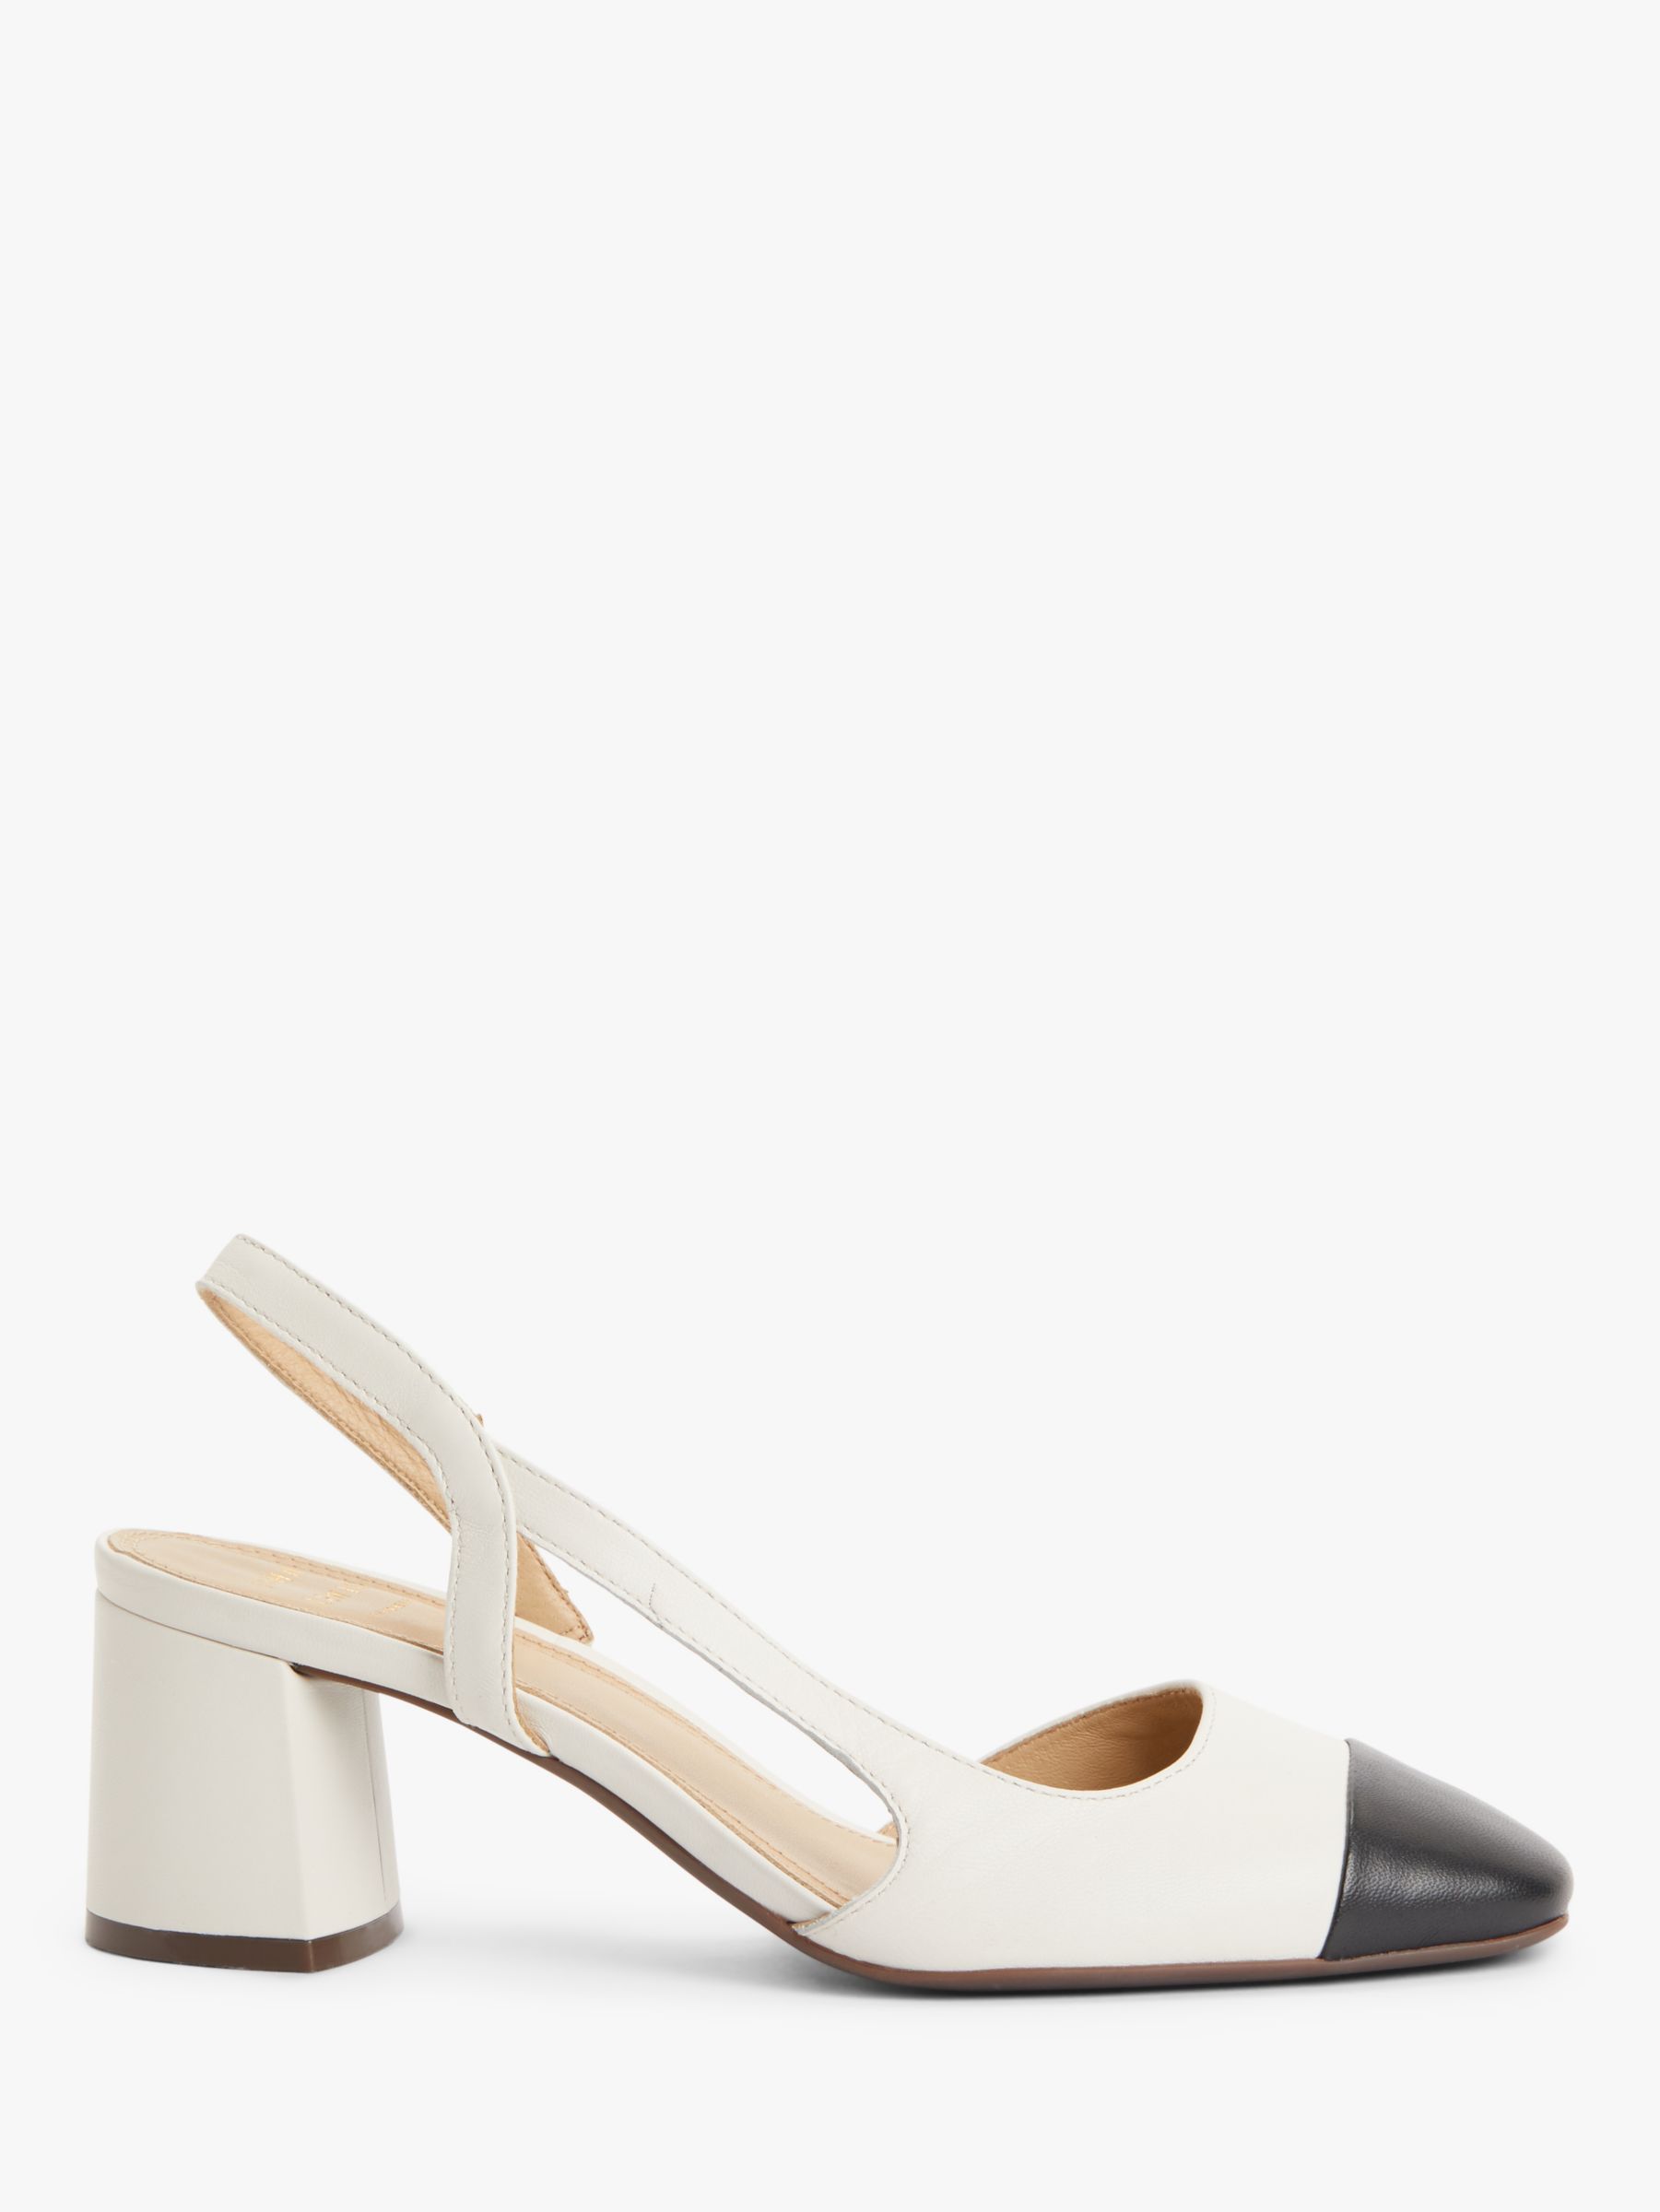 cream slingback heels